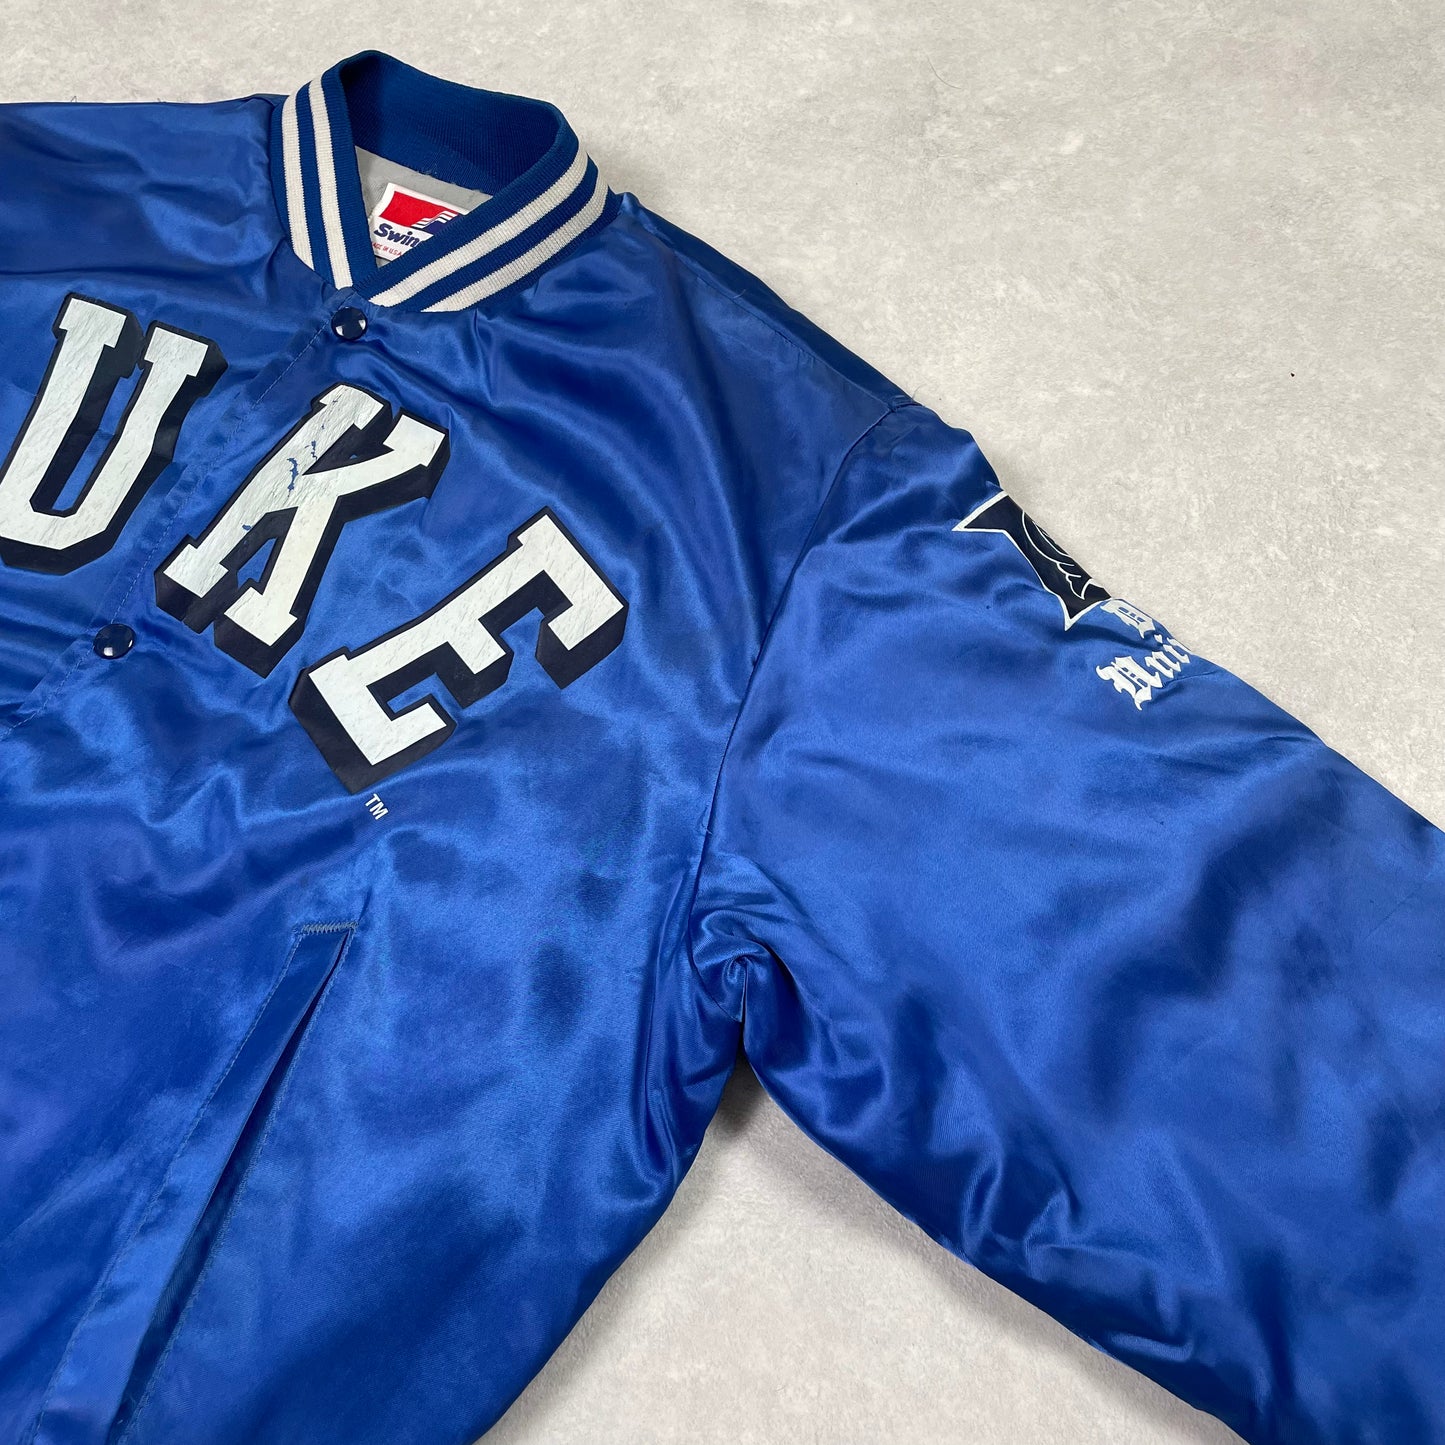 Vintage Varsity Jacket Bomber “Duke University” Made in USA 90’s Satin